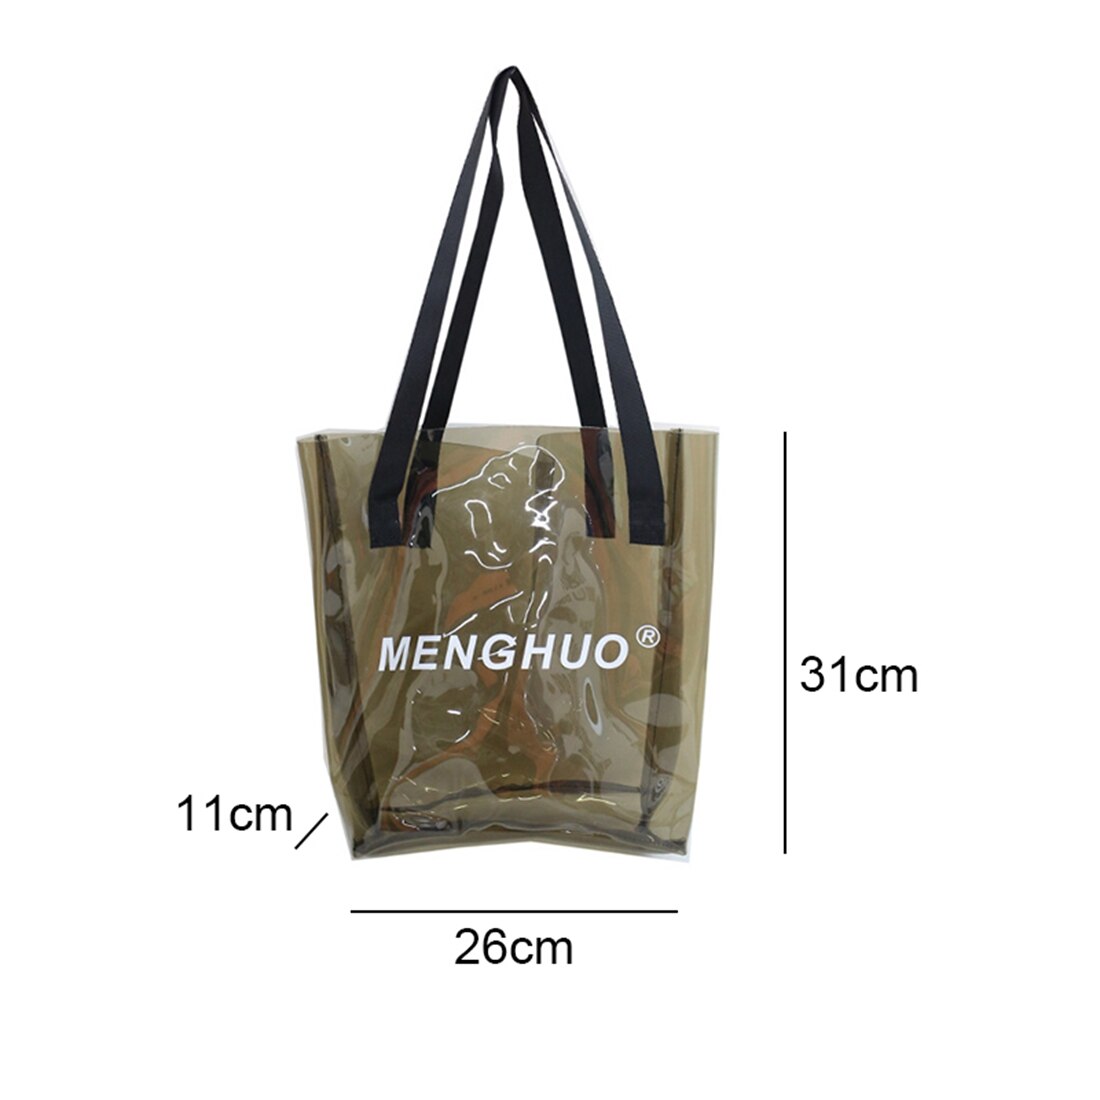 2018 fashion new PVC transparent letter "MENGHUO" jelly bag waterproof hand shoulder beach handbag - ebowsos